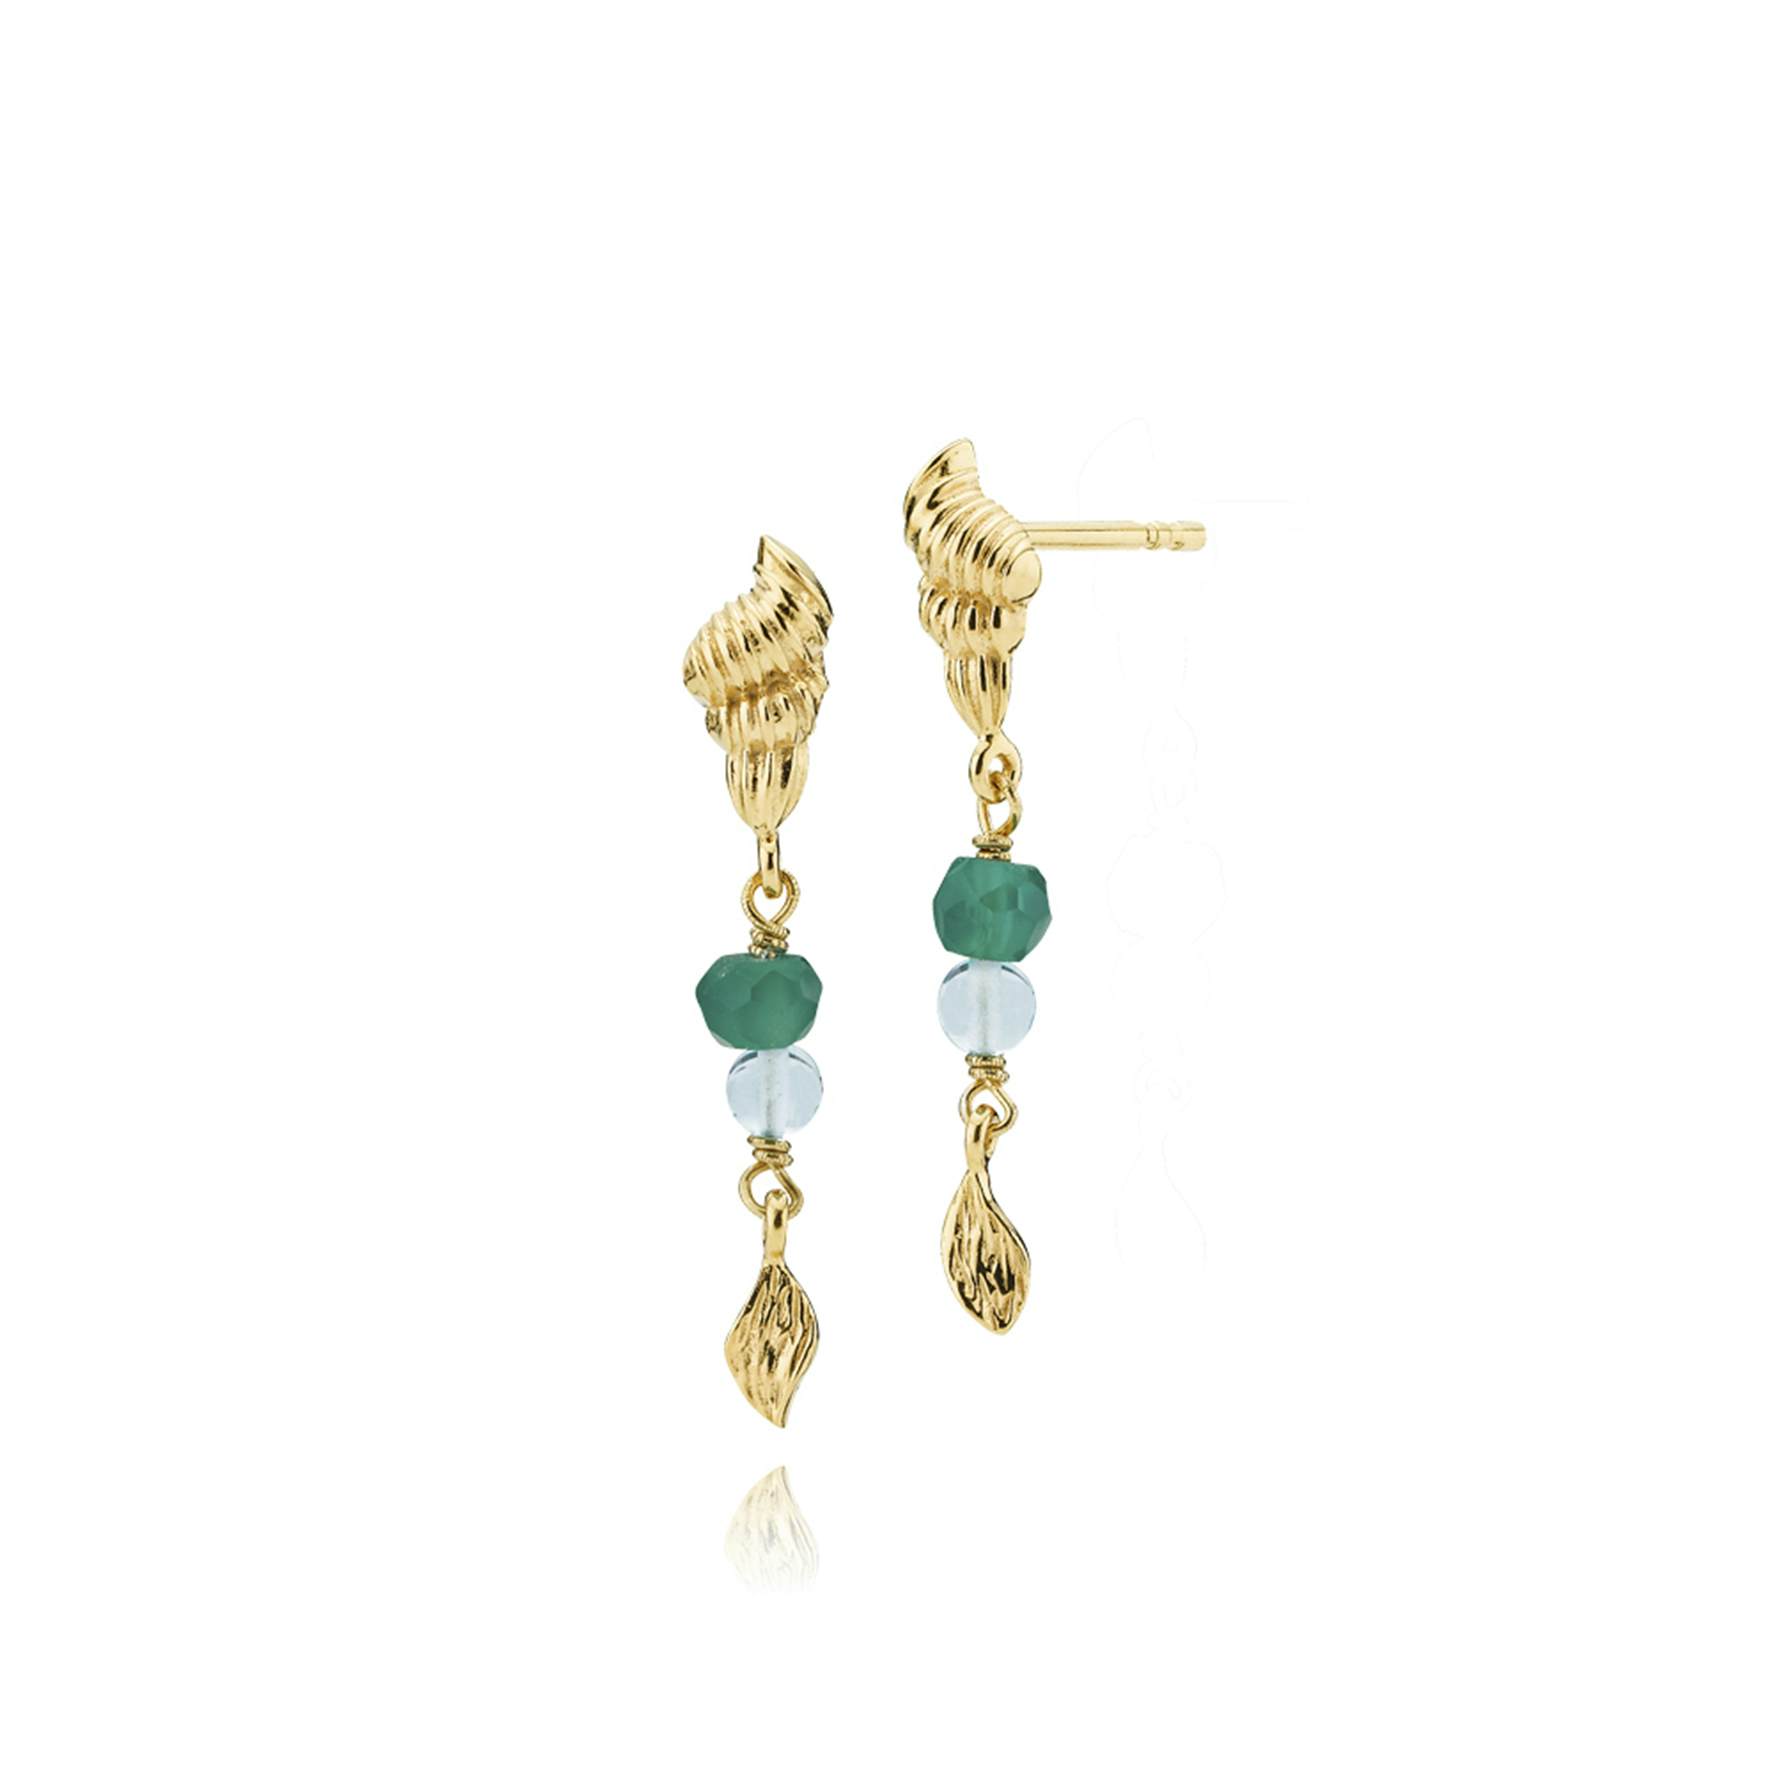 Kaia Earrings Green Onyx and Aqua Crystal von Sistie in Vergoldet-Silber Sterling 925|Blank